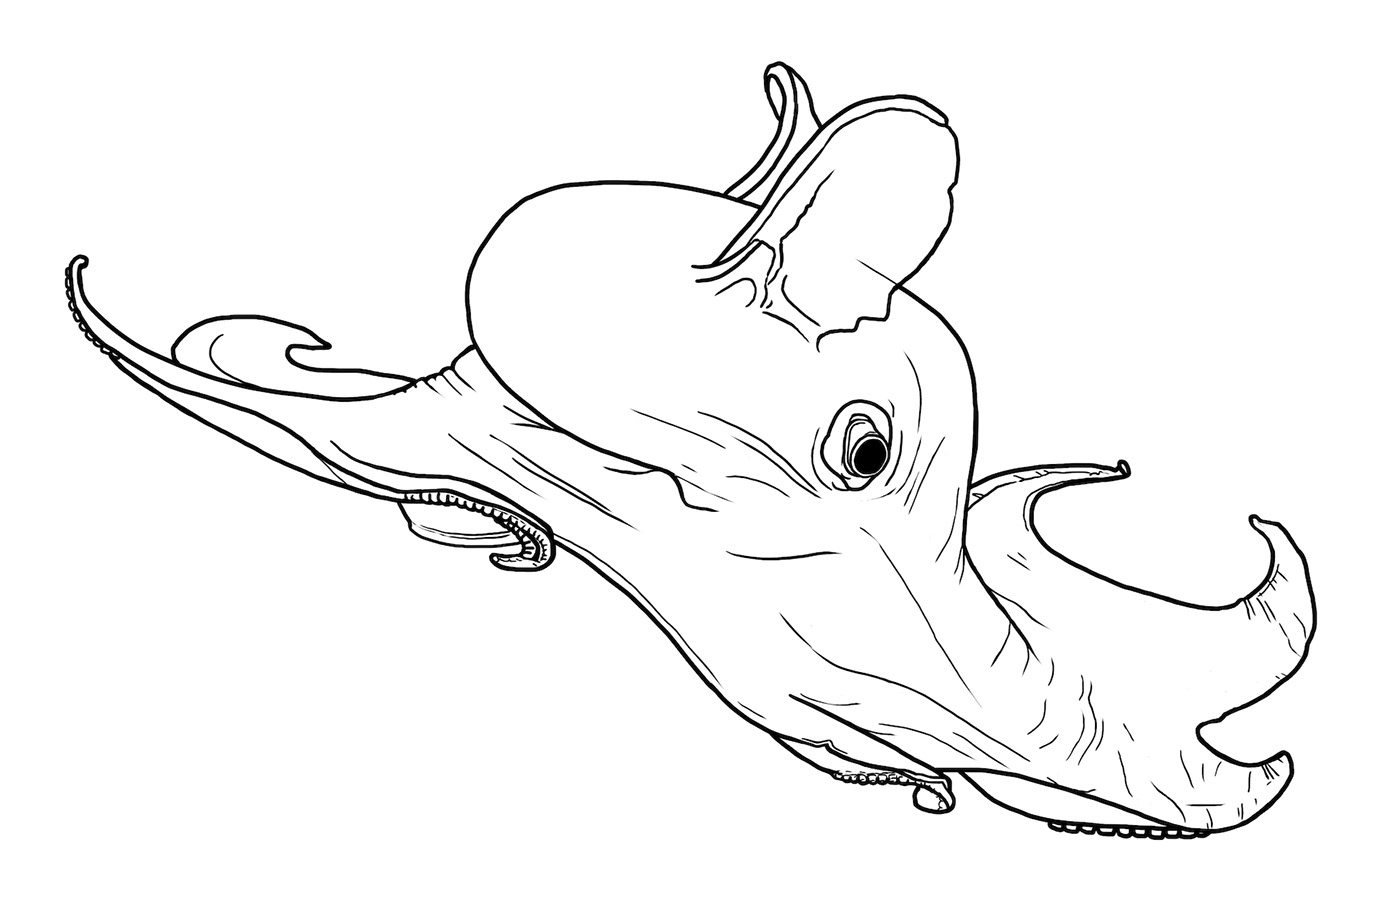 Drawing  digital illustration animal illustration animals sea creatures science illustration cuttlefish octopus Squid cephalopod